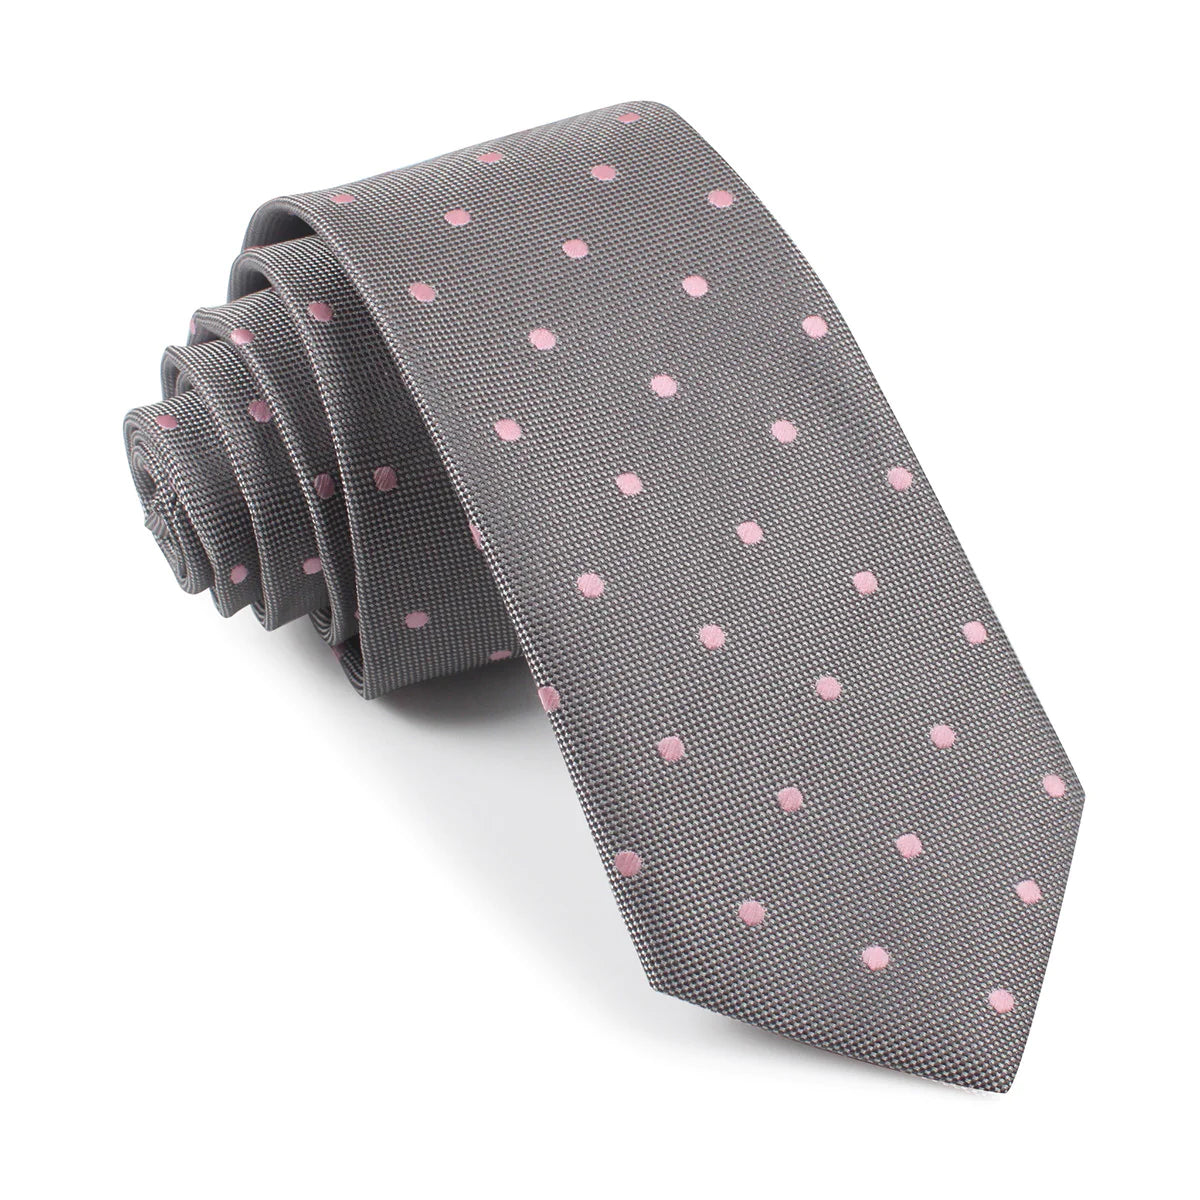 OTAA Tie - Grey with Baby Pink Polka Dots